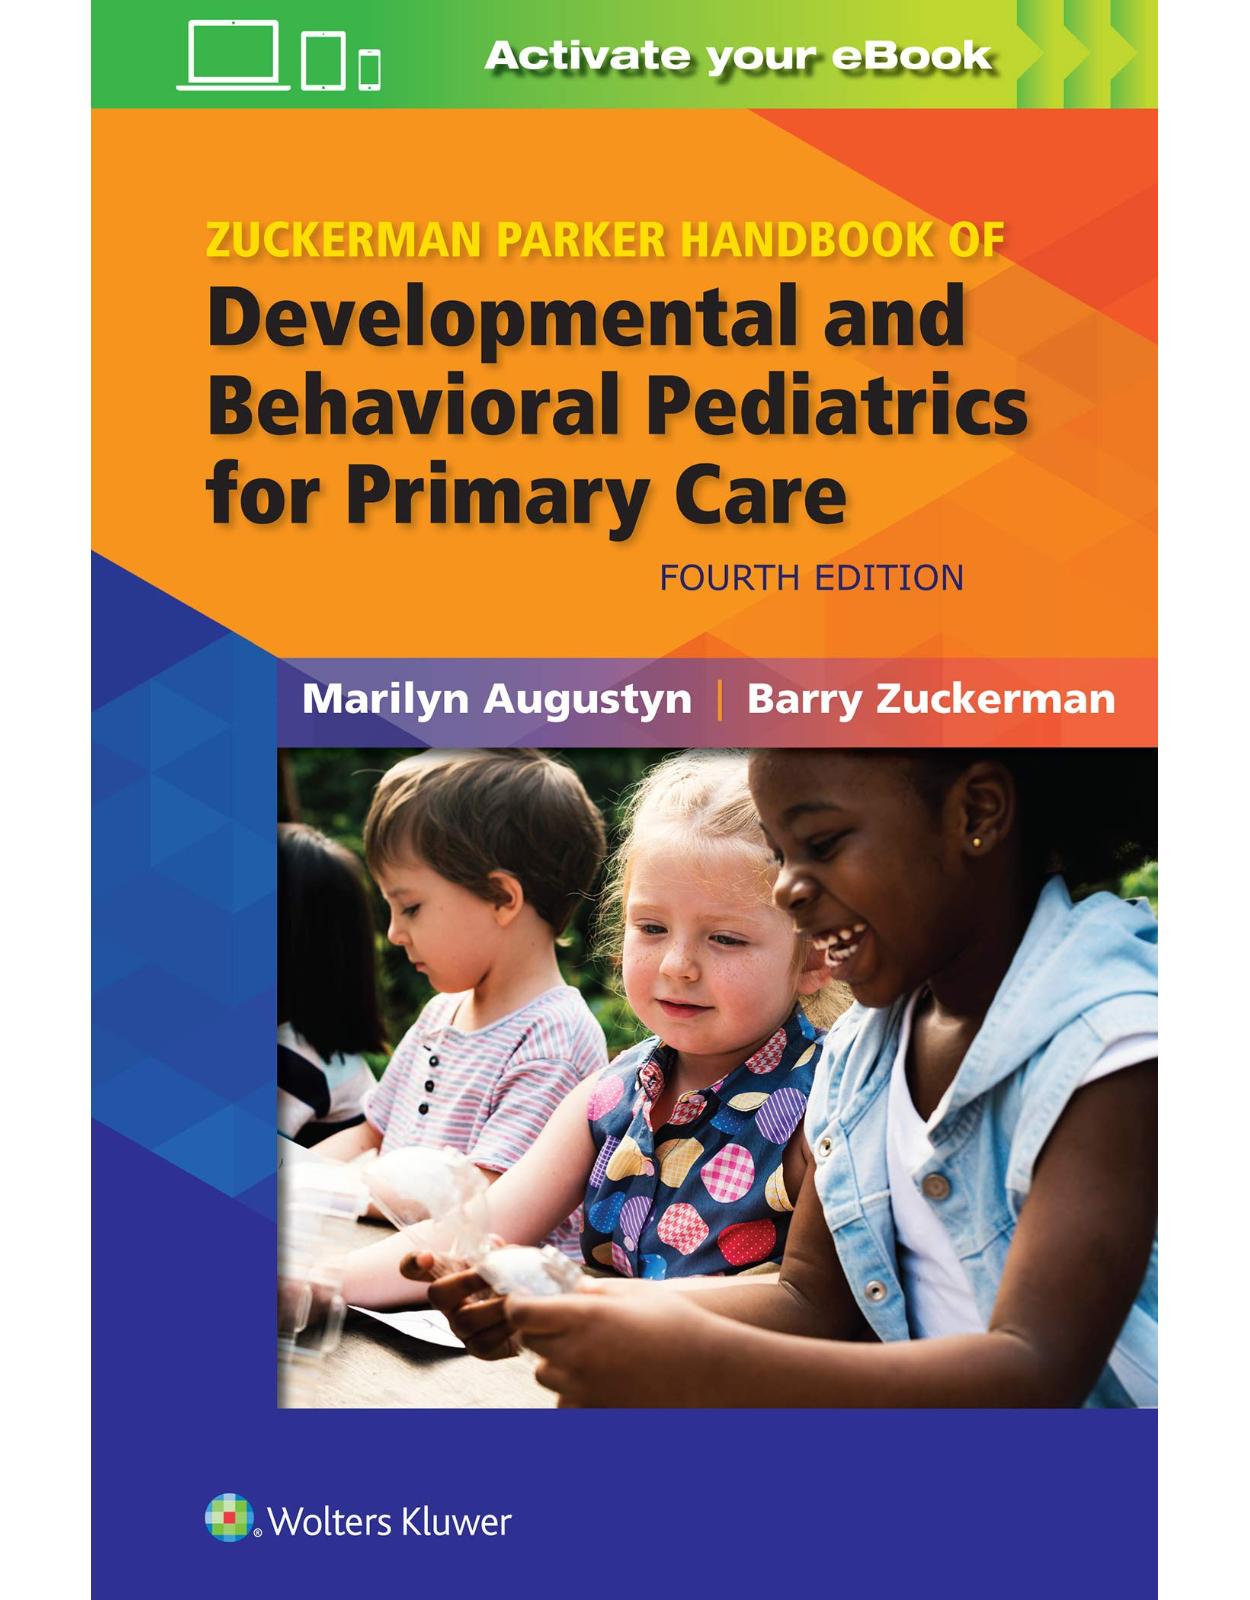 Zuckerman Parker Handbook of Developmental and Behavioral Pediatrics for Primary Care